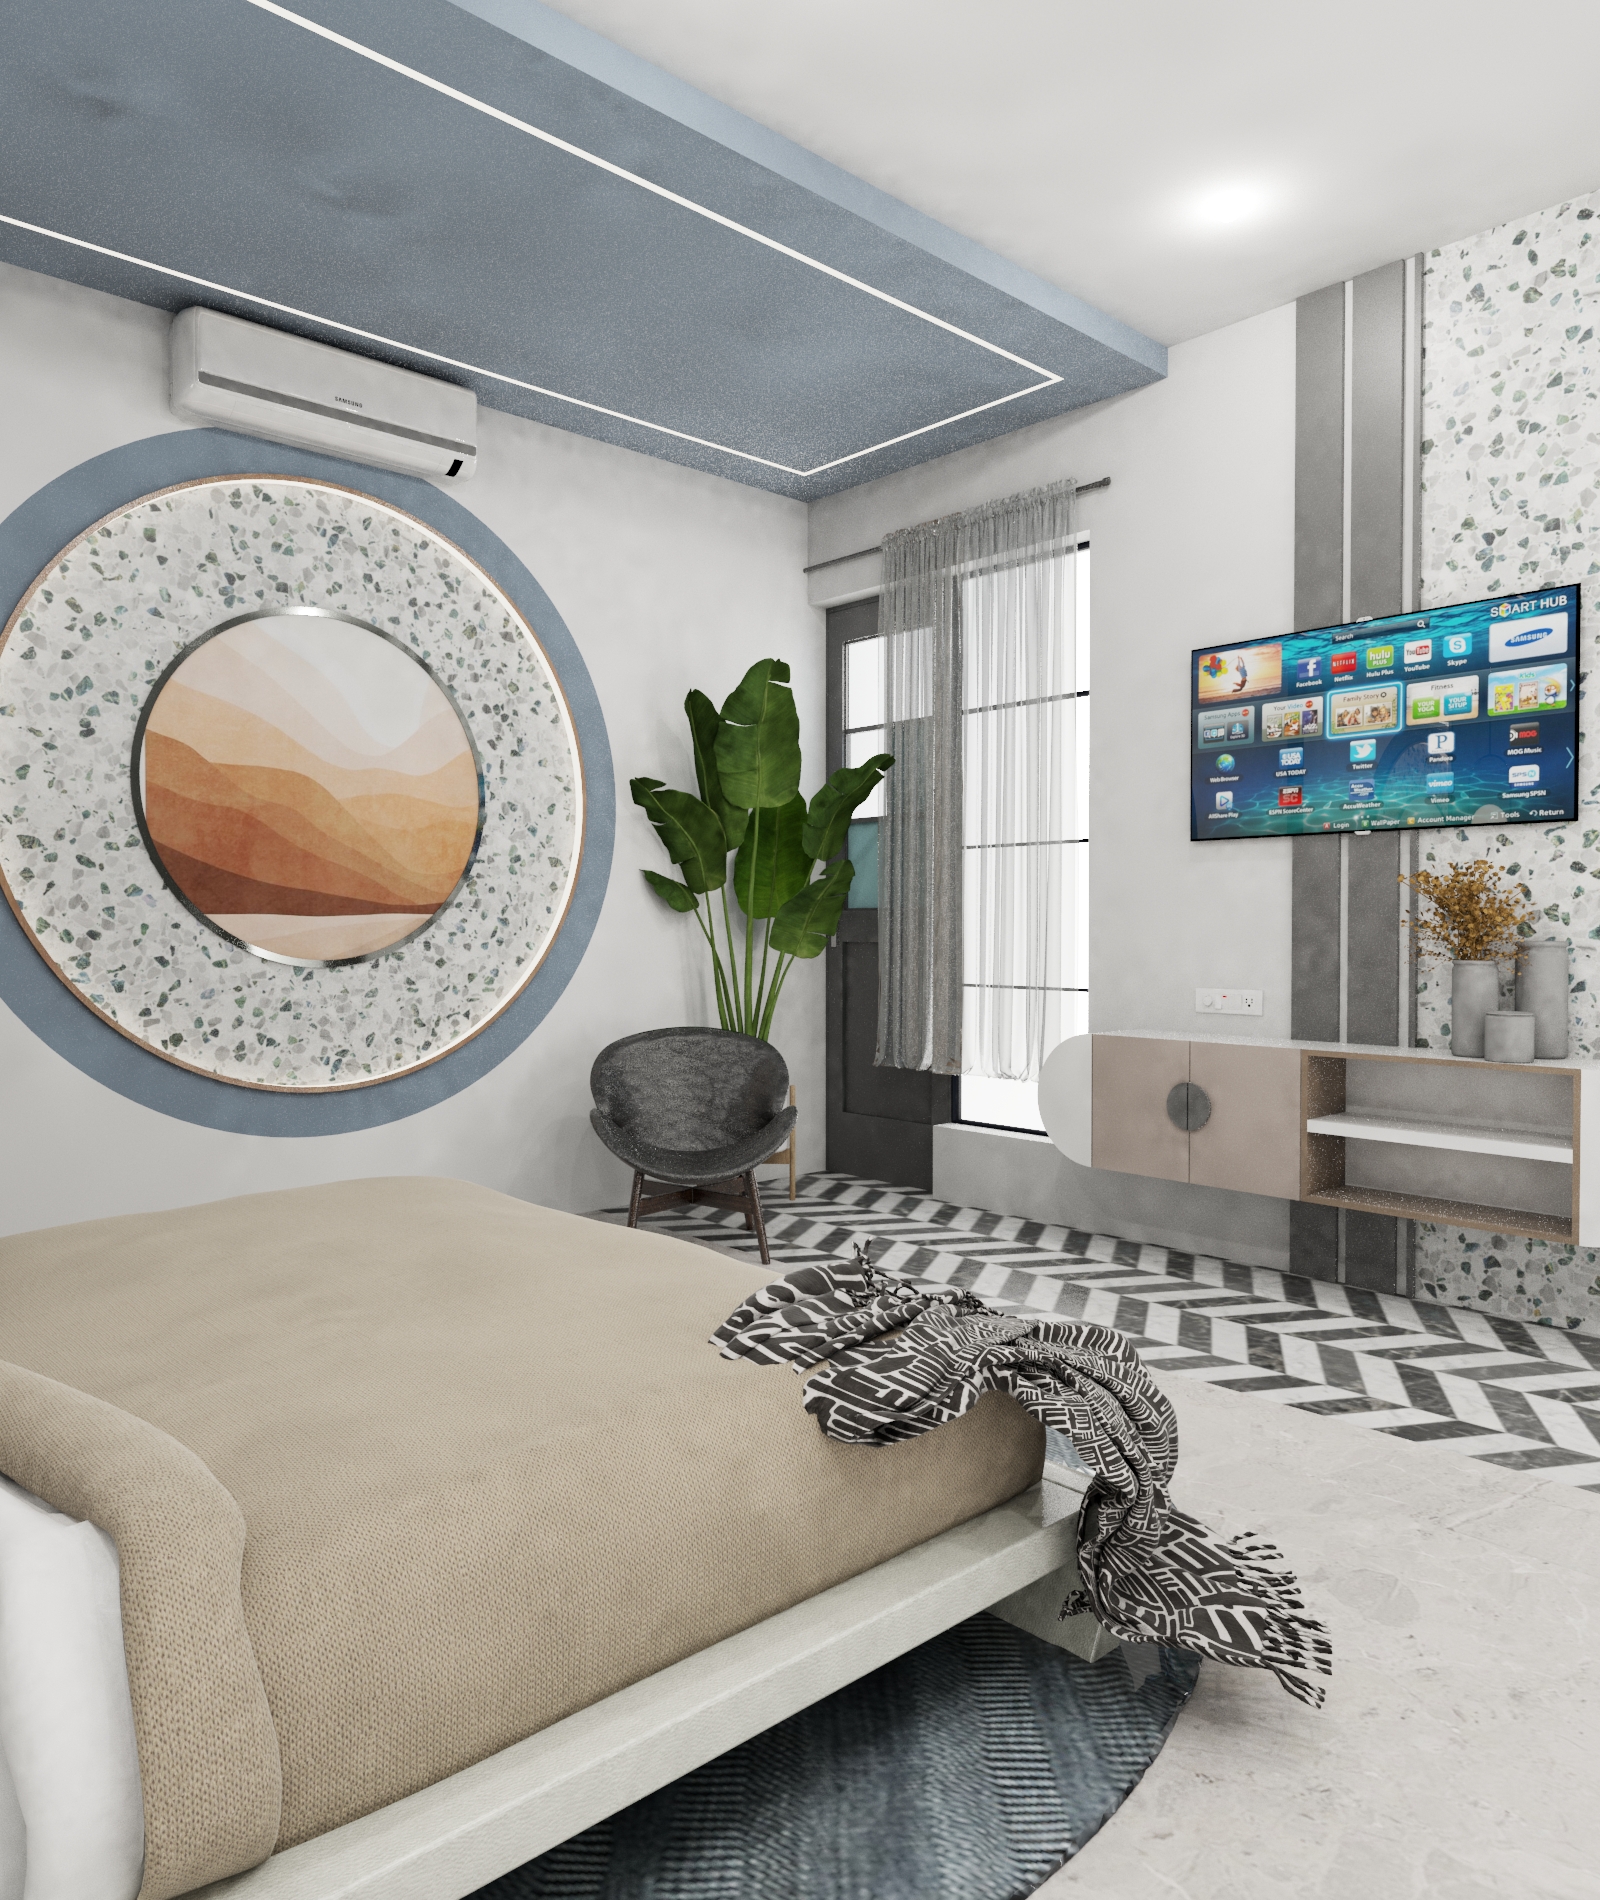 Bedroom Design With Wall Art 